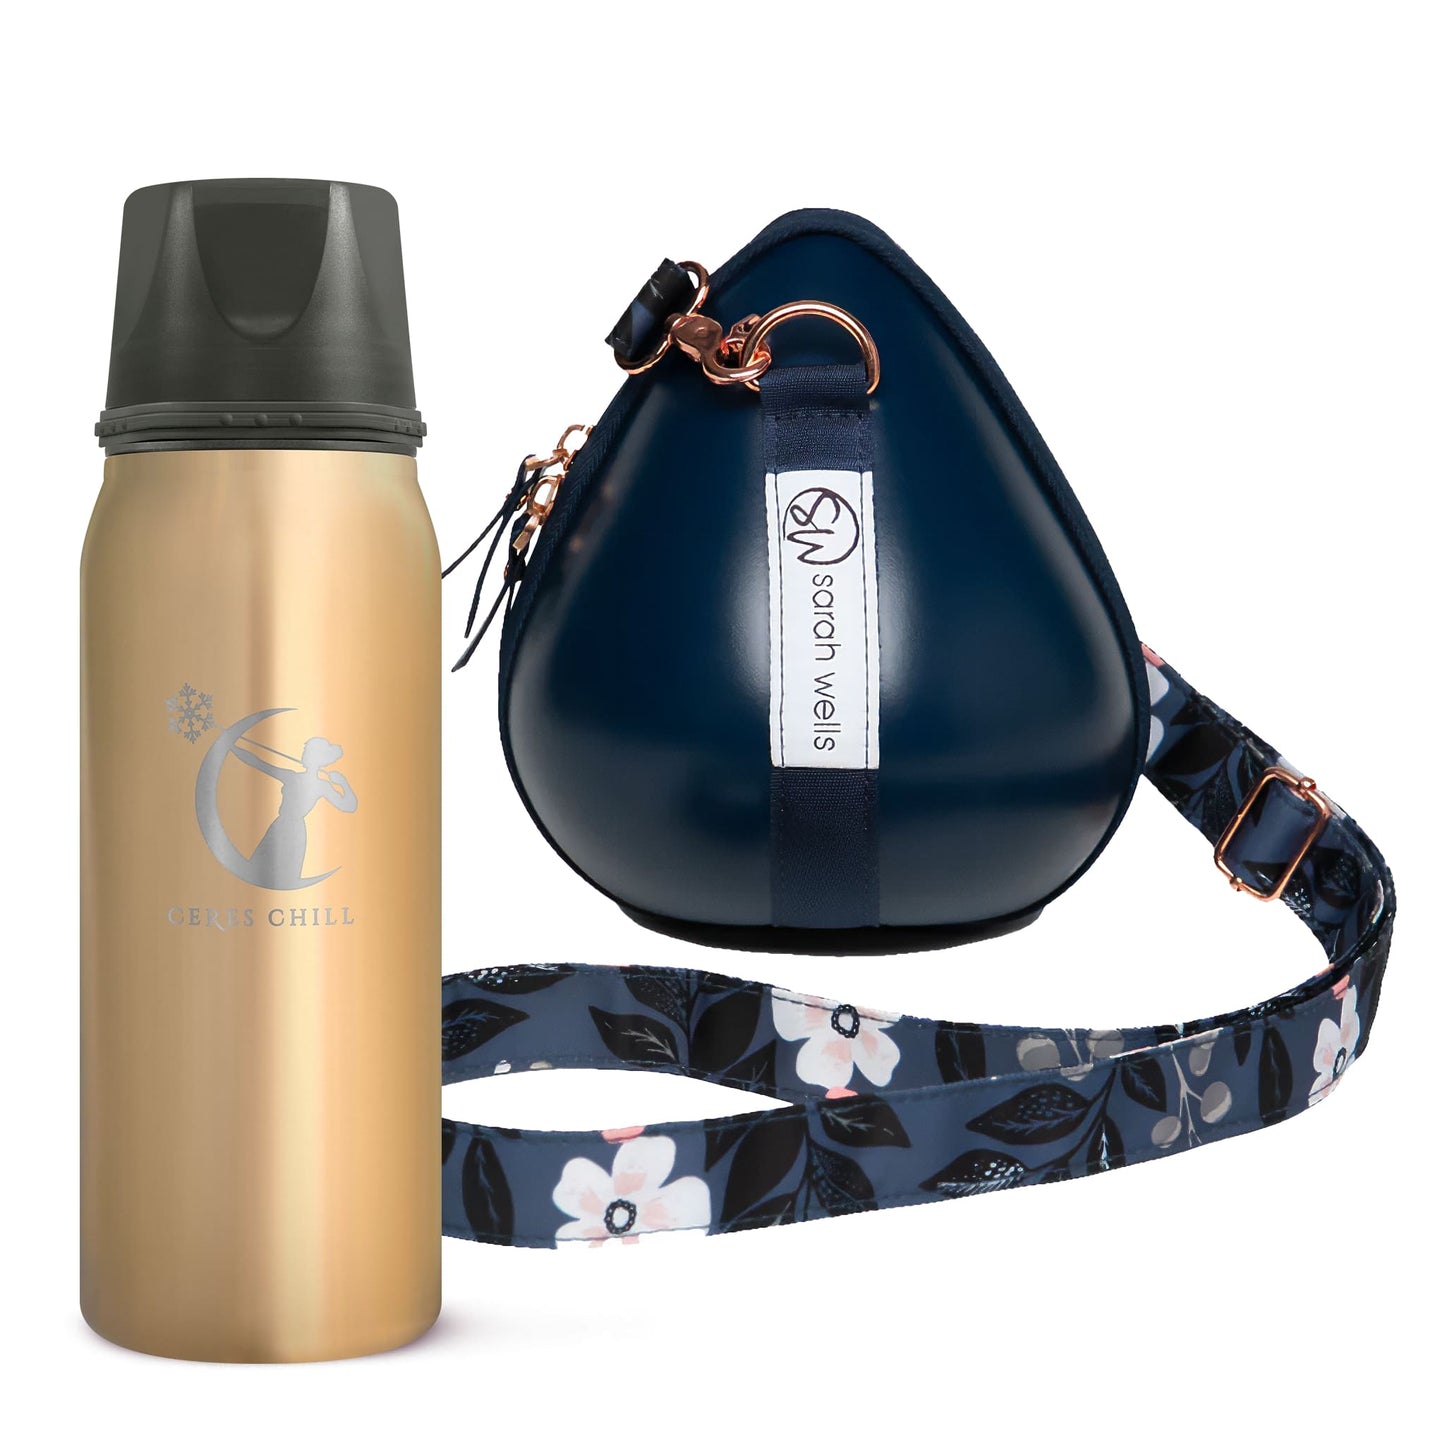 Milkwear® Pump Bag- Sarah Wells x Ceres Chill (Navy/Floral)